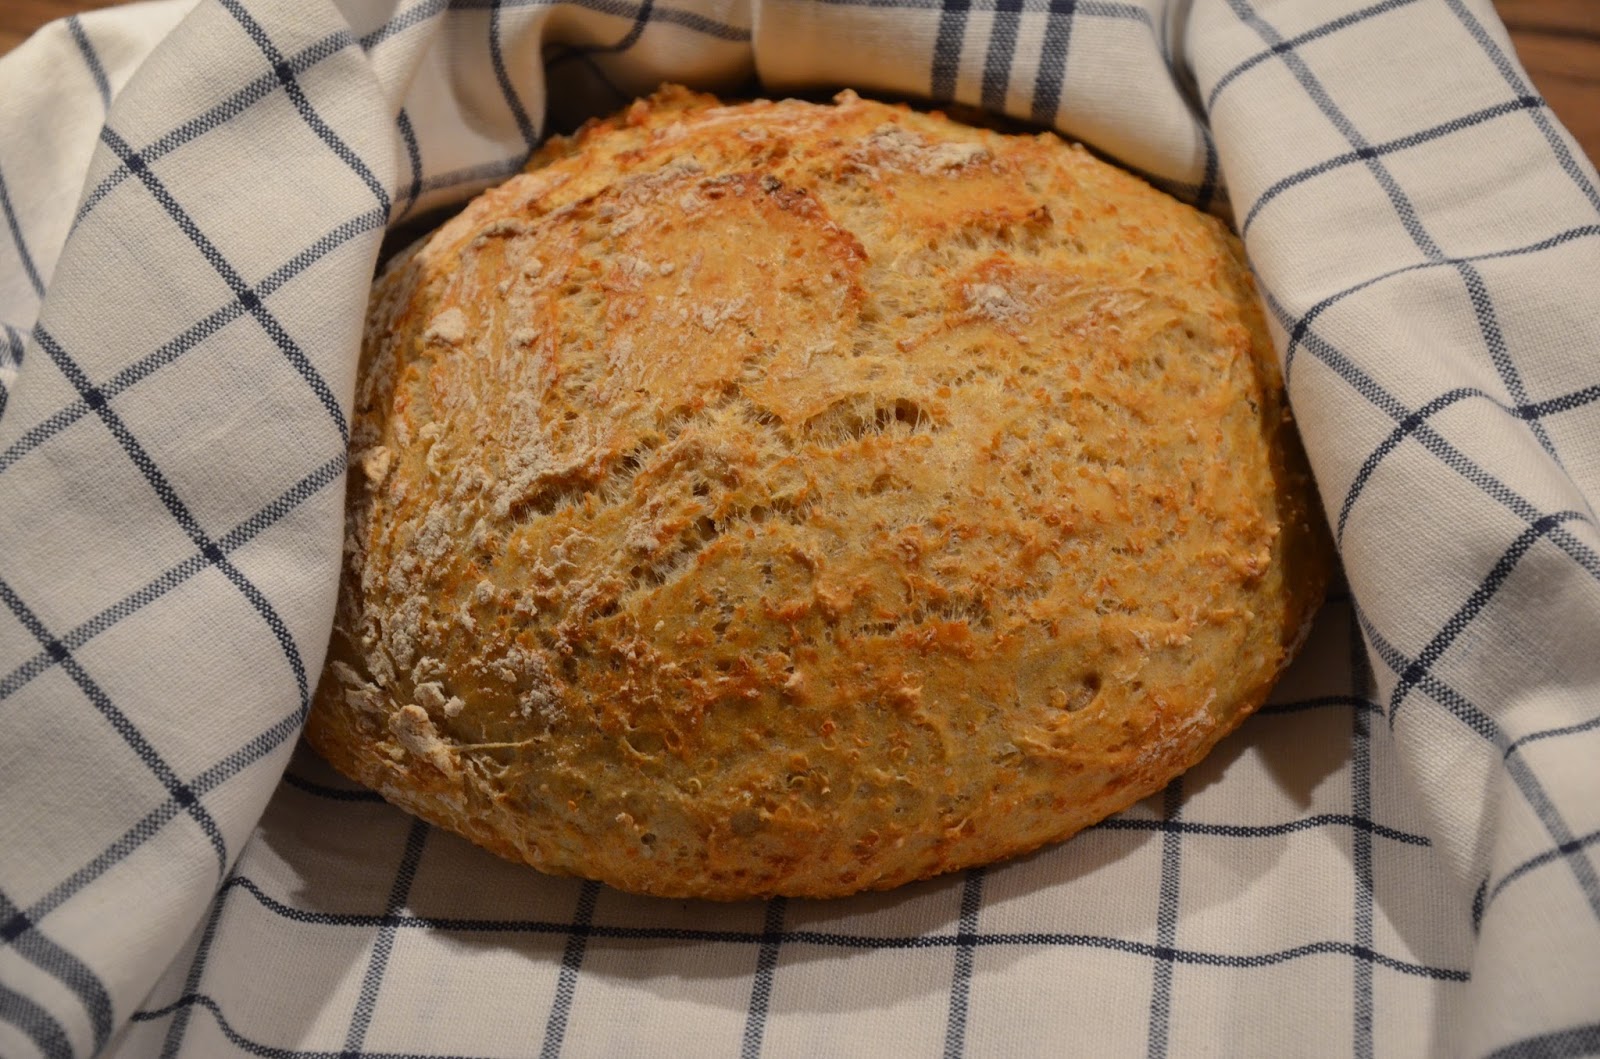 Quinoa-Brot im Topf gebacken - Rezeptra - Food and More